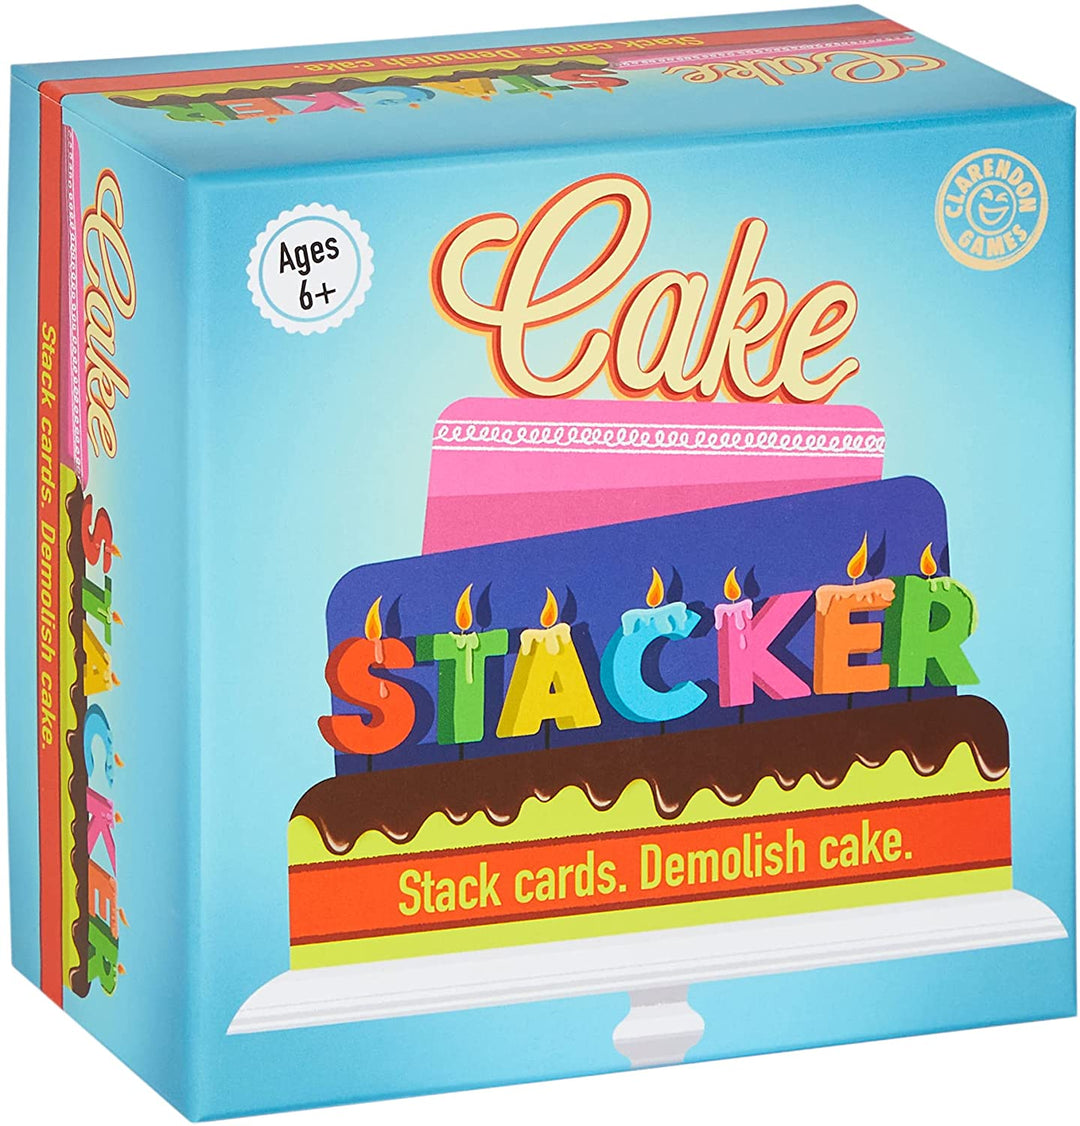 Cake Stacker